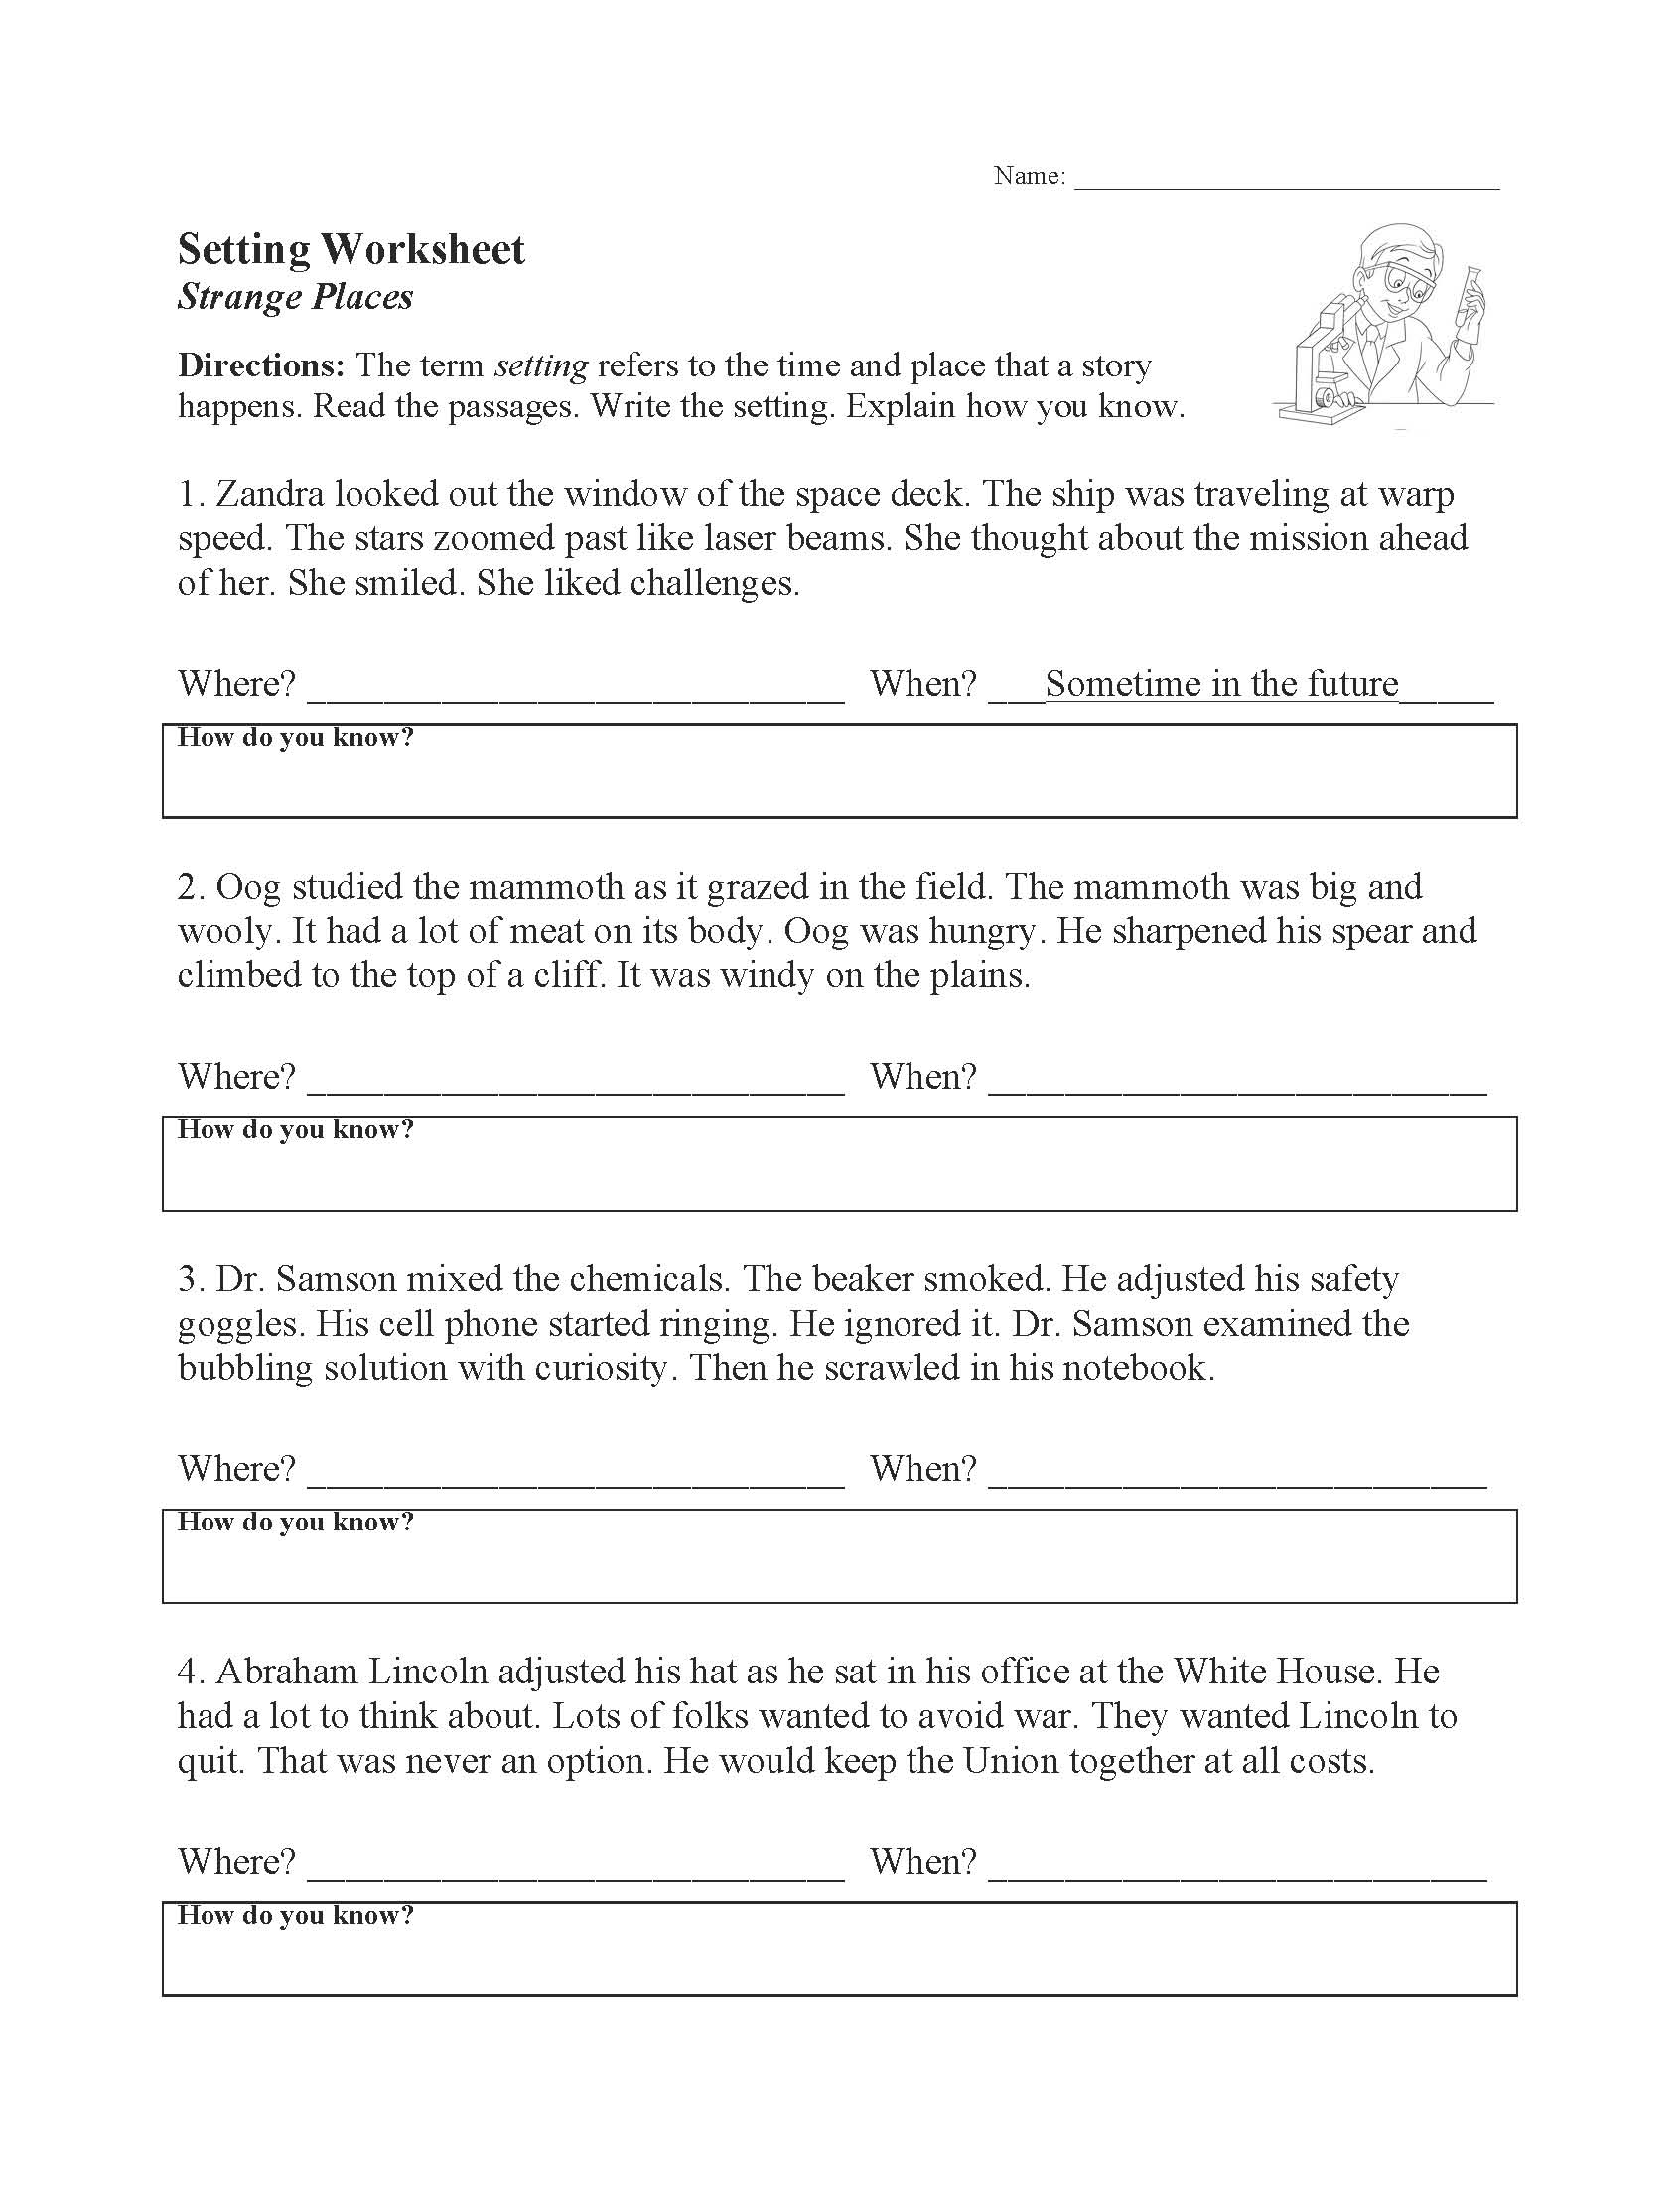 Setting Worksheet  Elements of Fiction Activity With Regard To Elements Of Fiction Worksheet